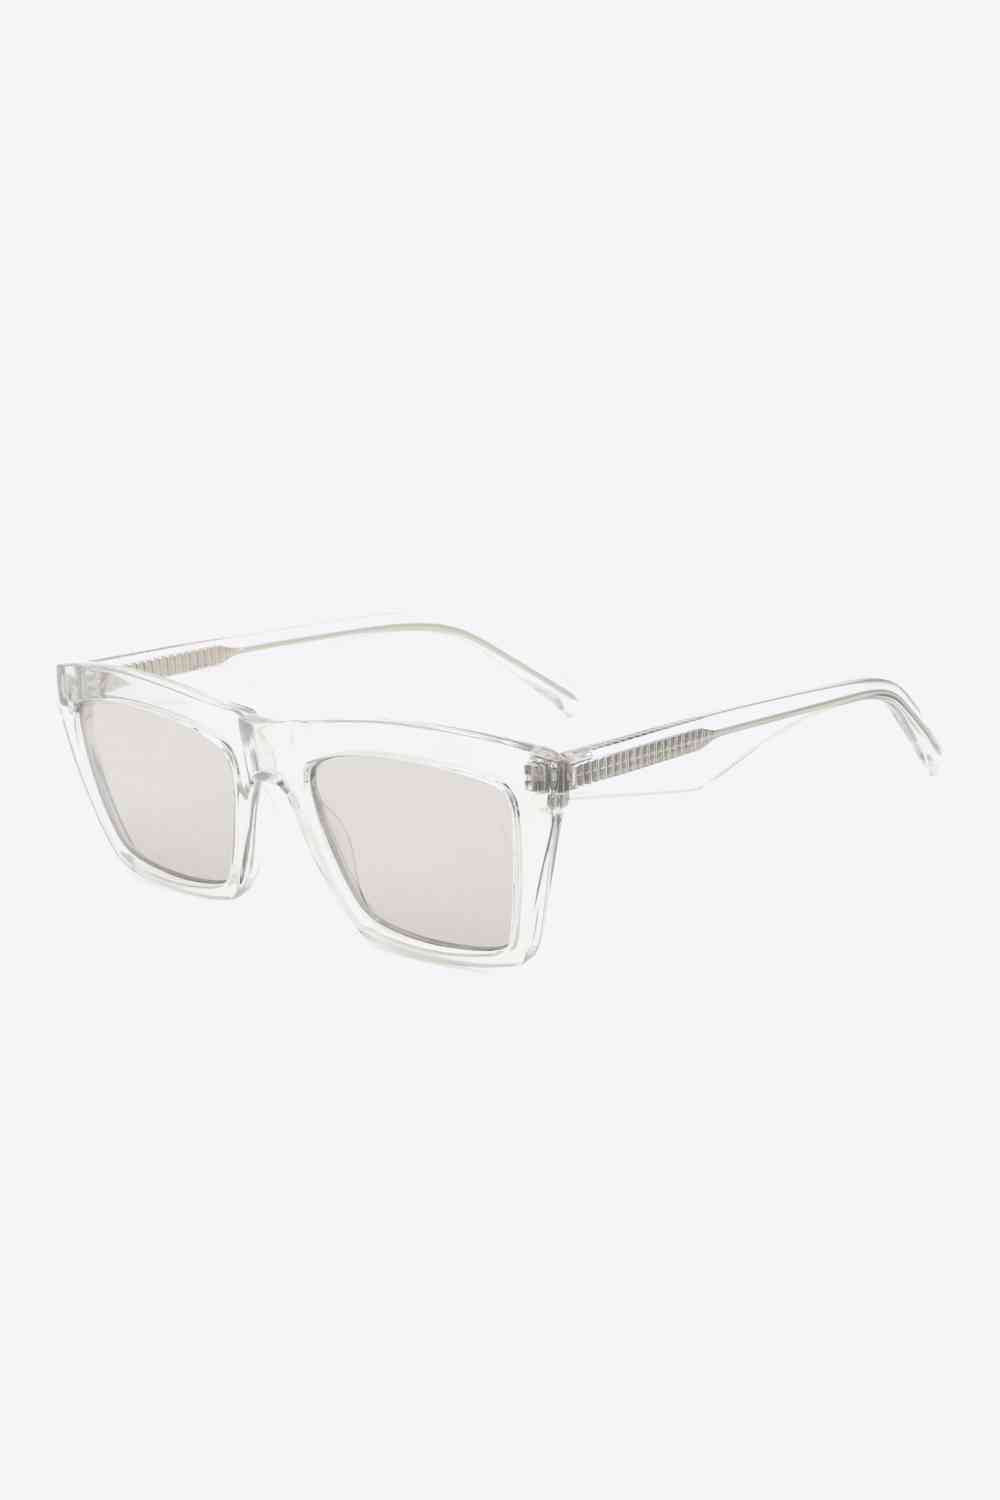 Cellulose Propionate Frame Rectangle Sunglasses - SELFTRITSS